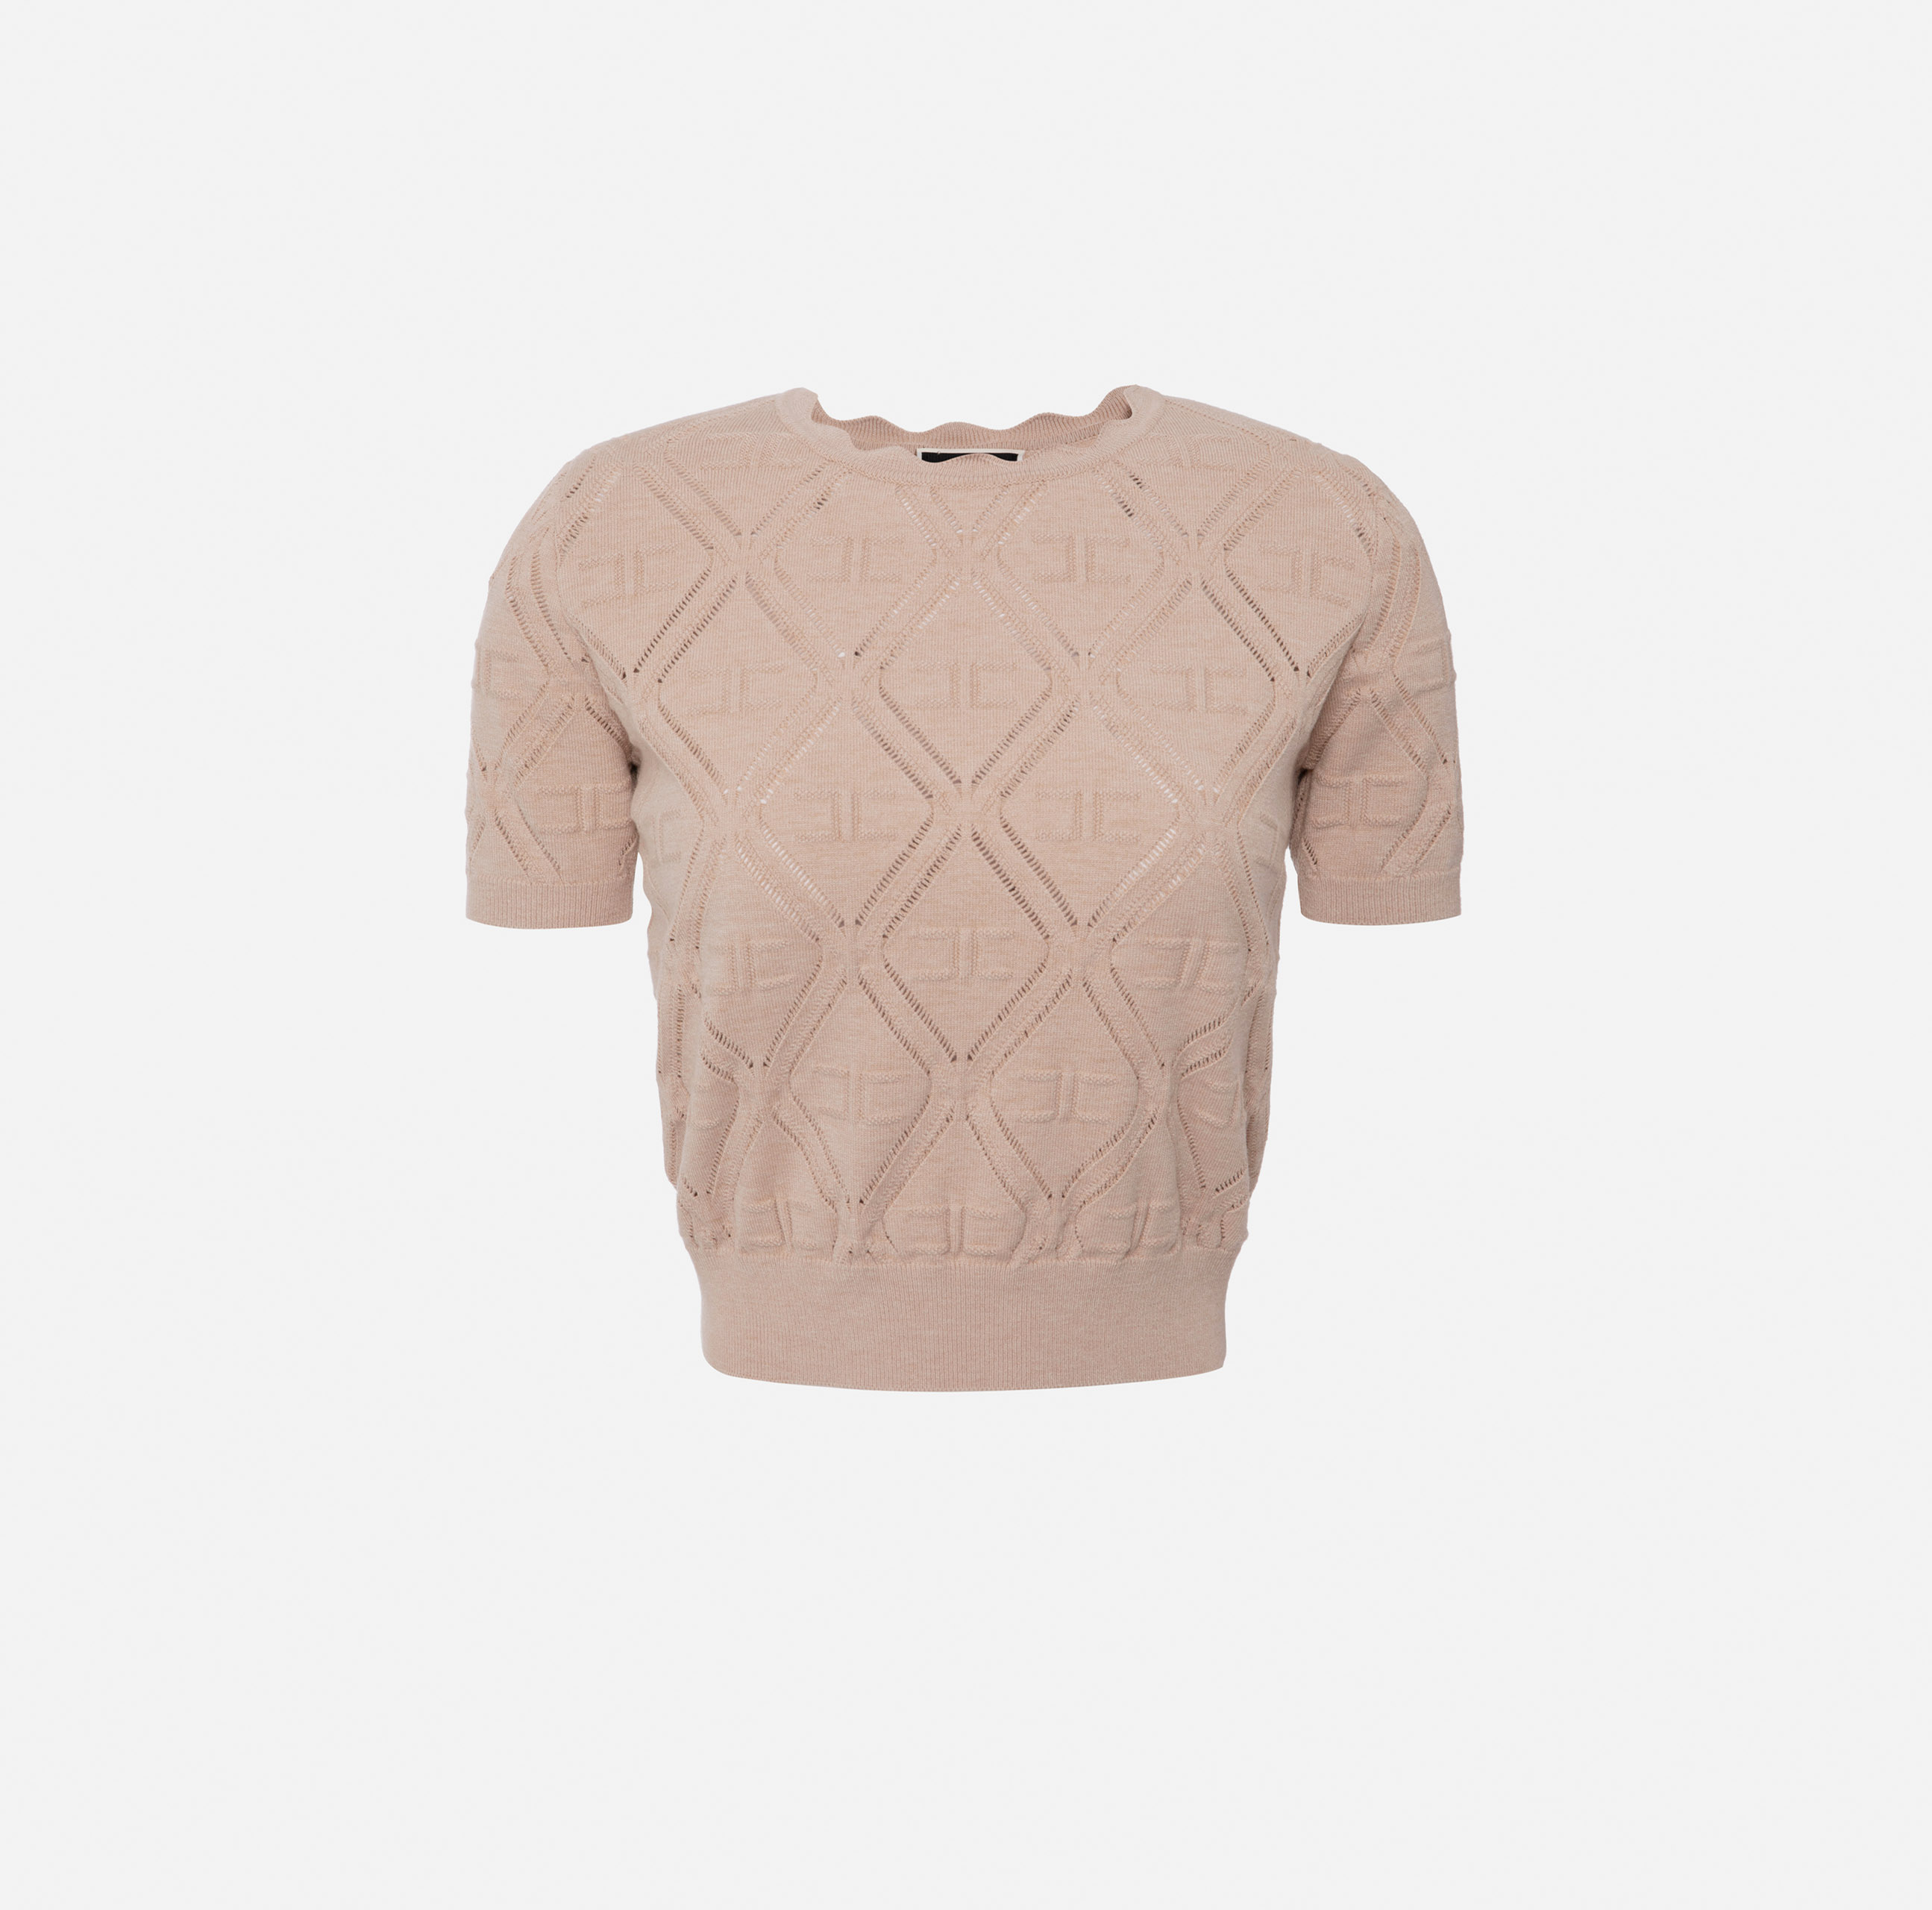 Knit T-shirt in lace stitch - Elisabetta Franchi